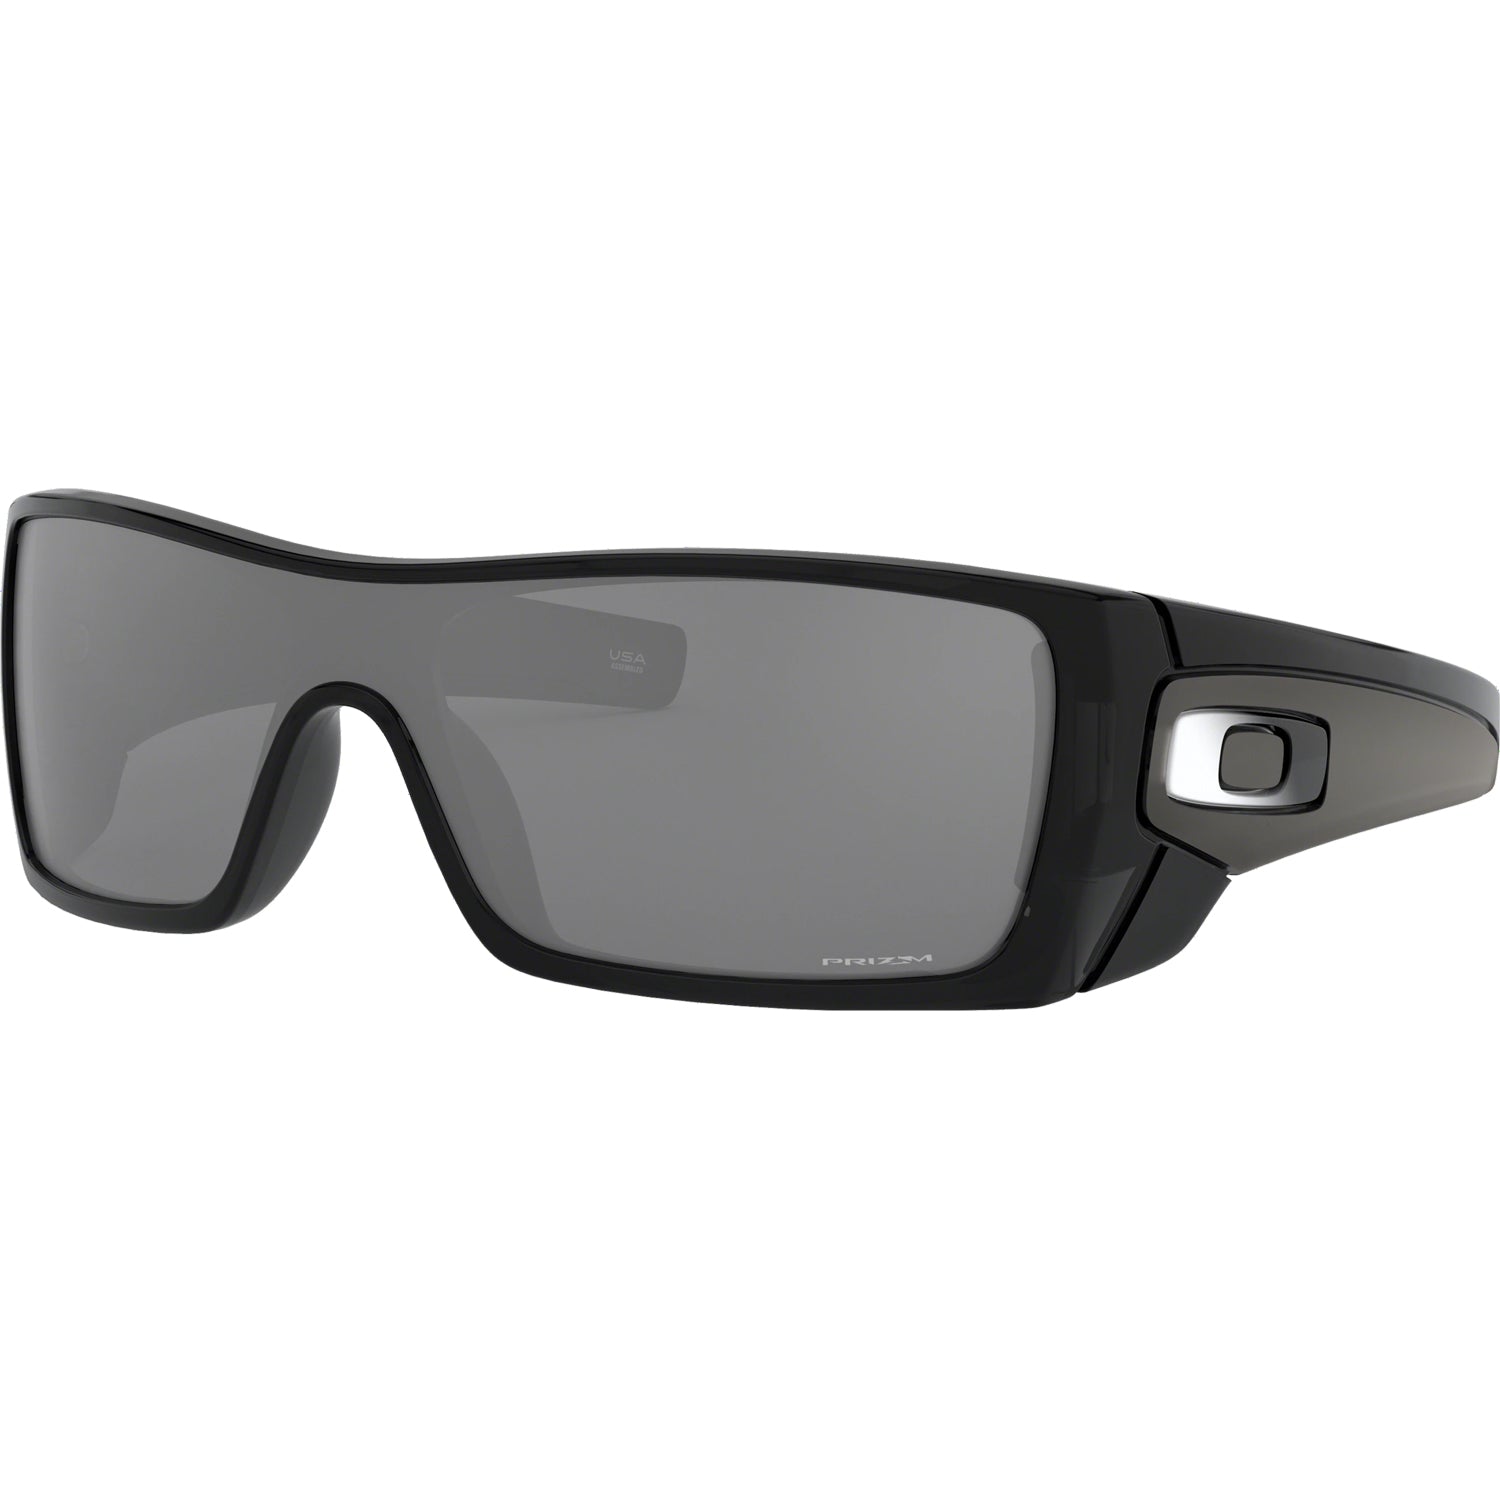 Oakley Batwolf Sunglasses - Buy Now Pay 